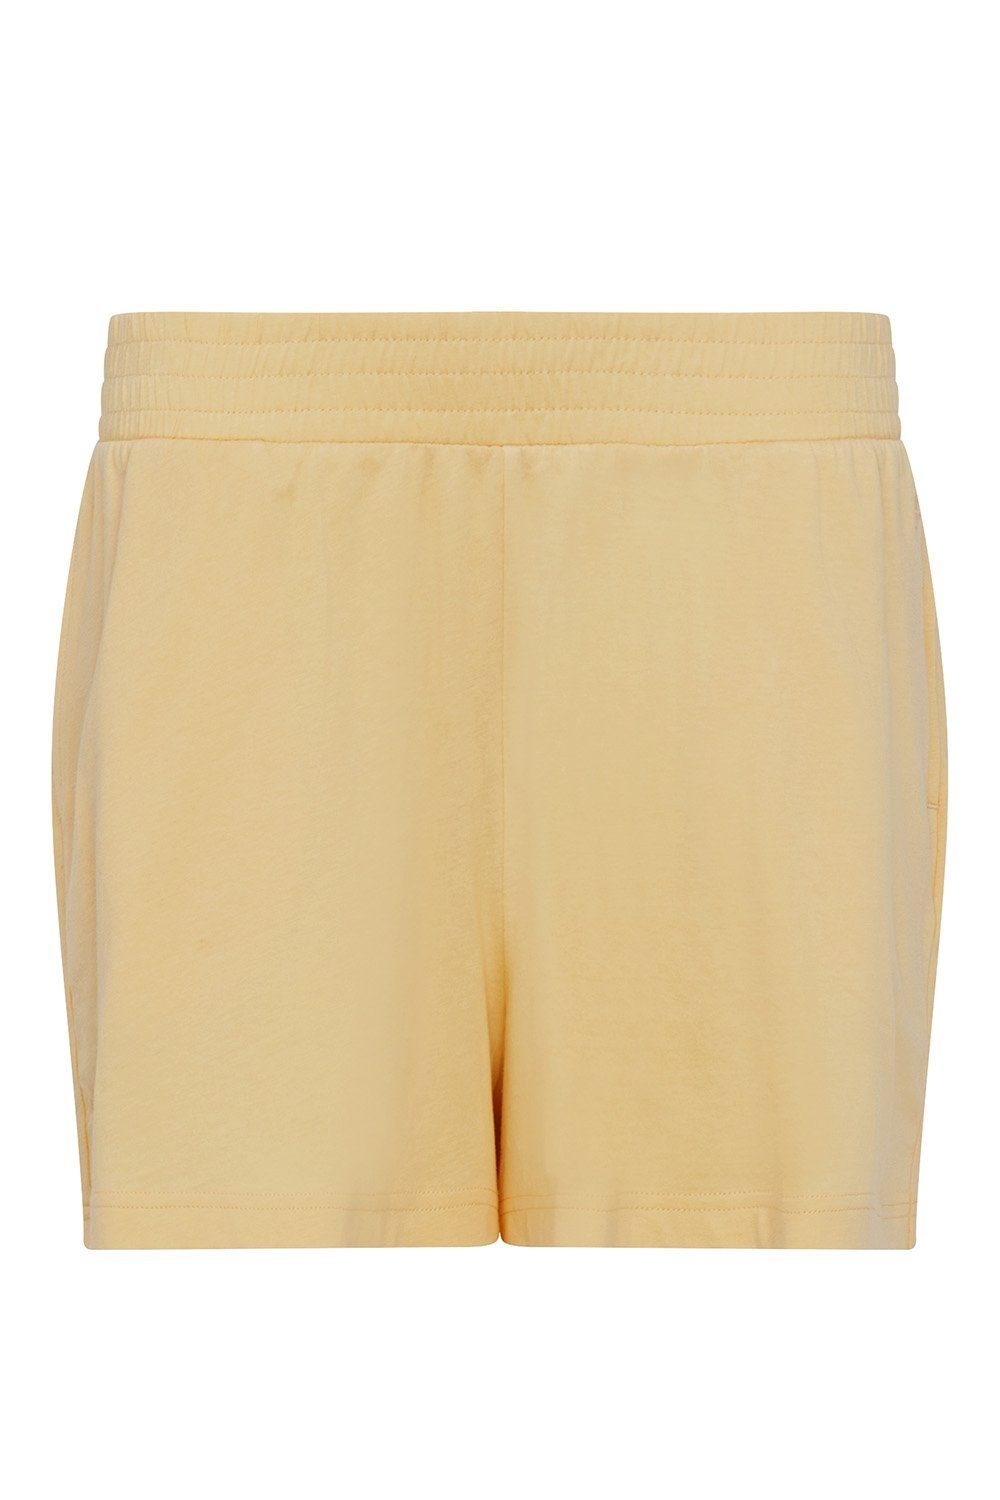 seidensticker Shorts Shorts yellow 513661